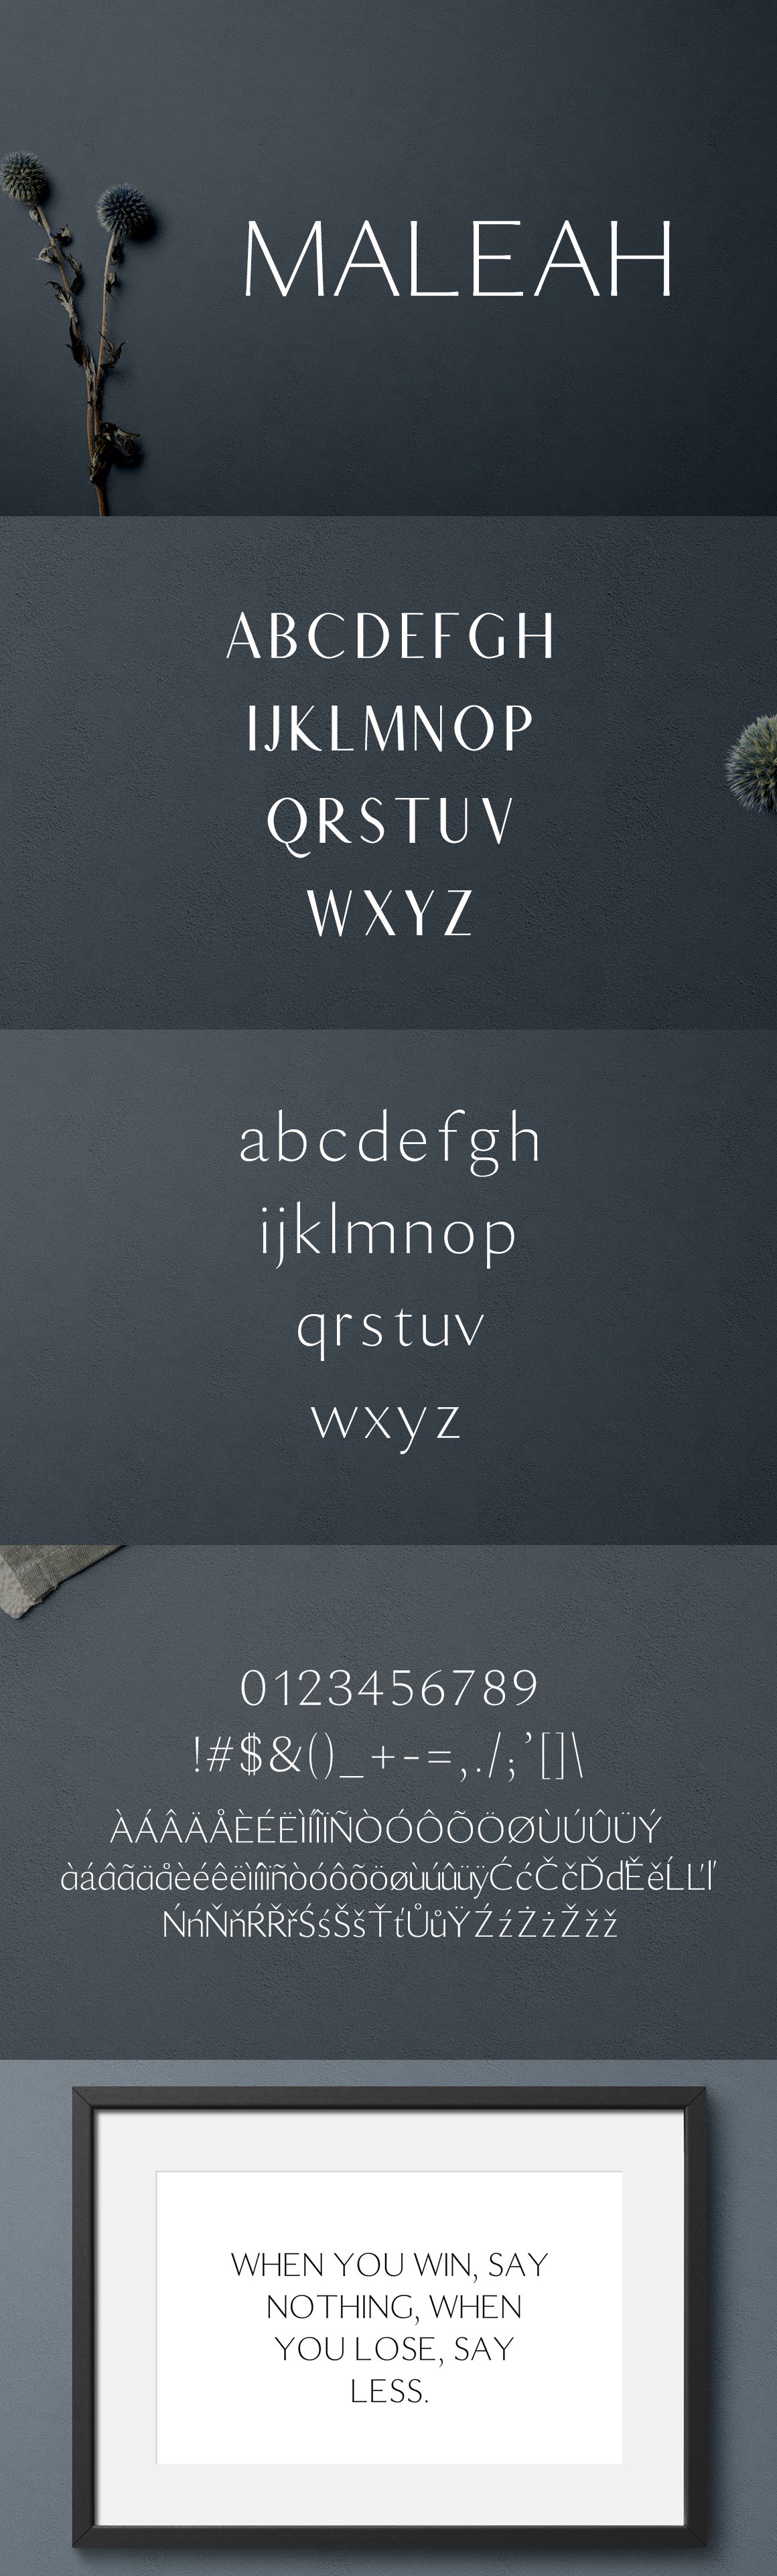 Maleah Sans Serif 4 Font Family Pack preview image.